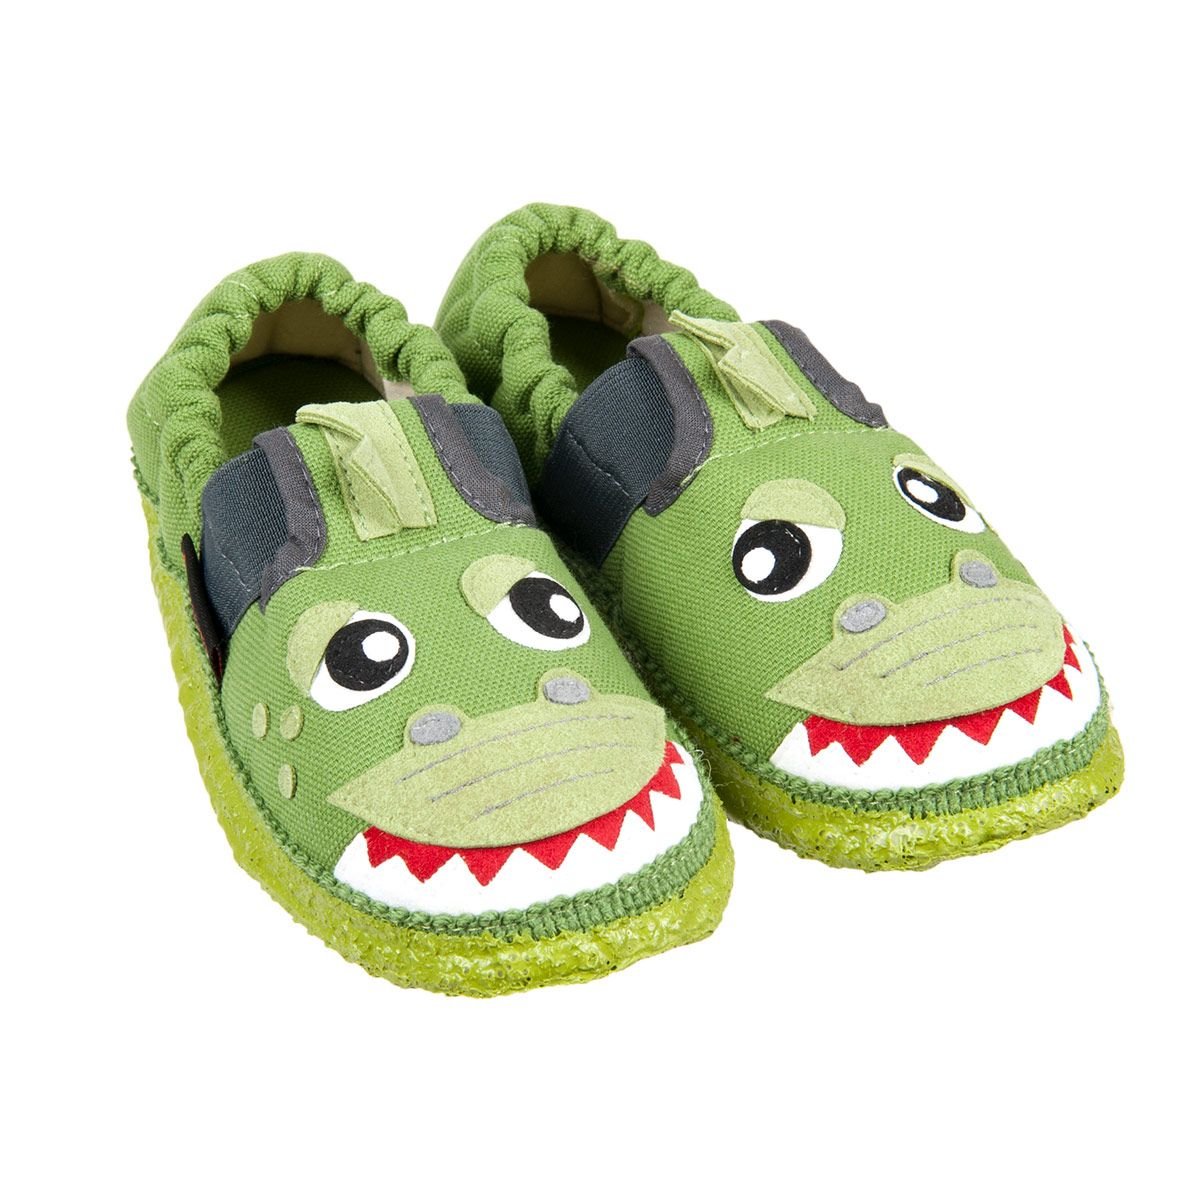 kids slippers online